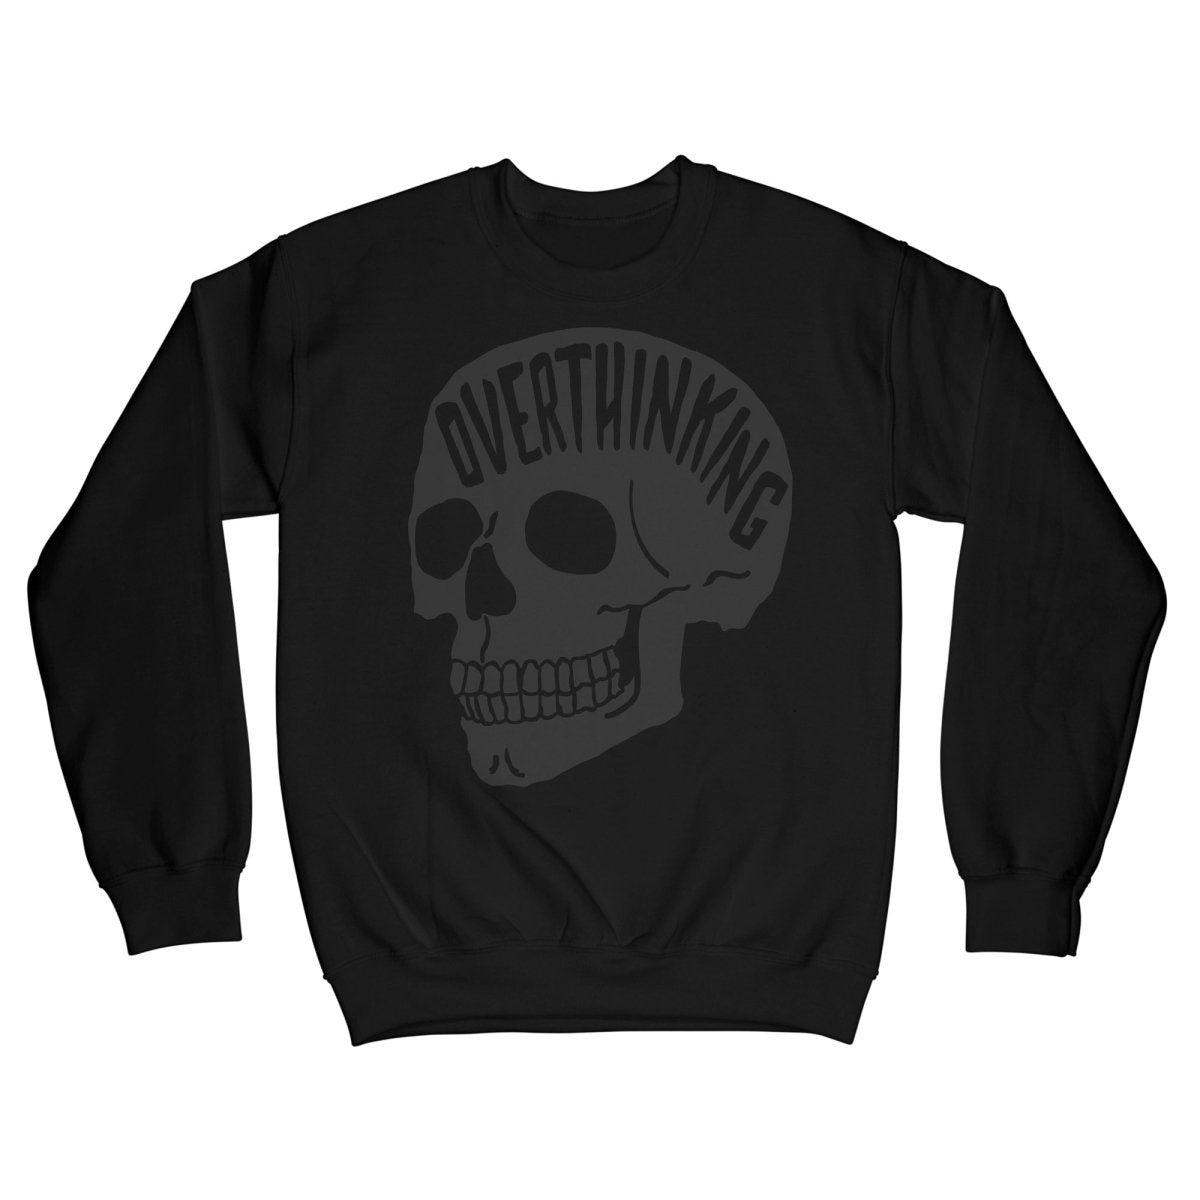 Black on Black Overthinking Sweatshirt - Sweatshirt - Pretty Bad Co.